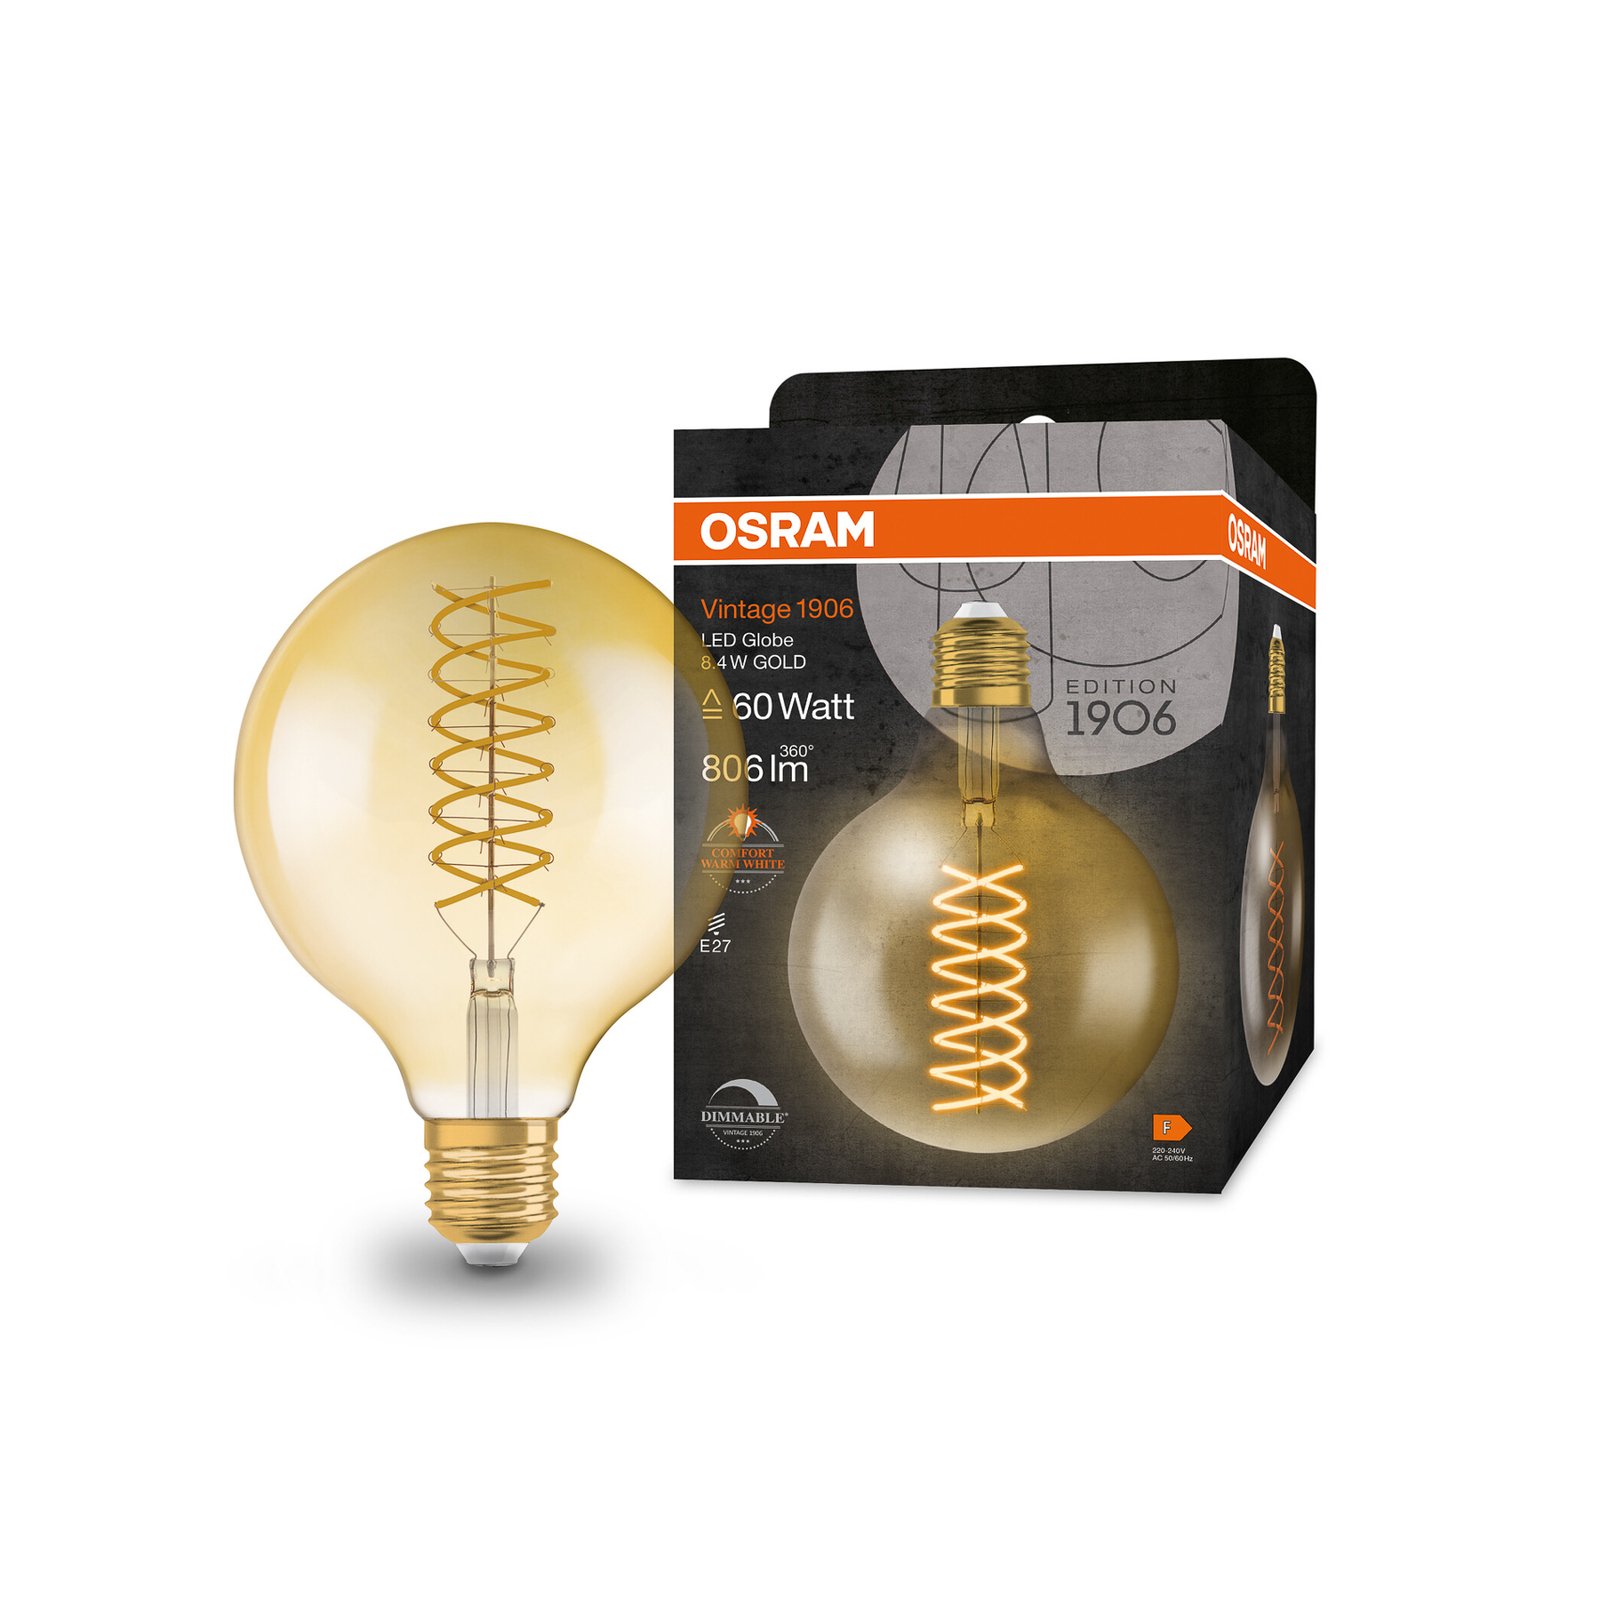 OSRAM LED Vintage 1906, G125, E27, 8,4 W, gold, 824, dim.